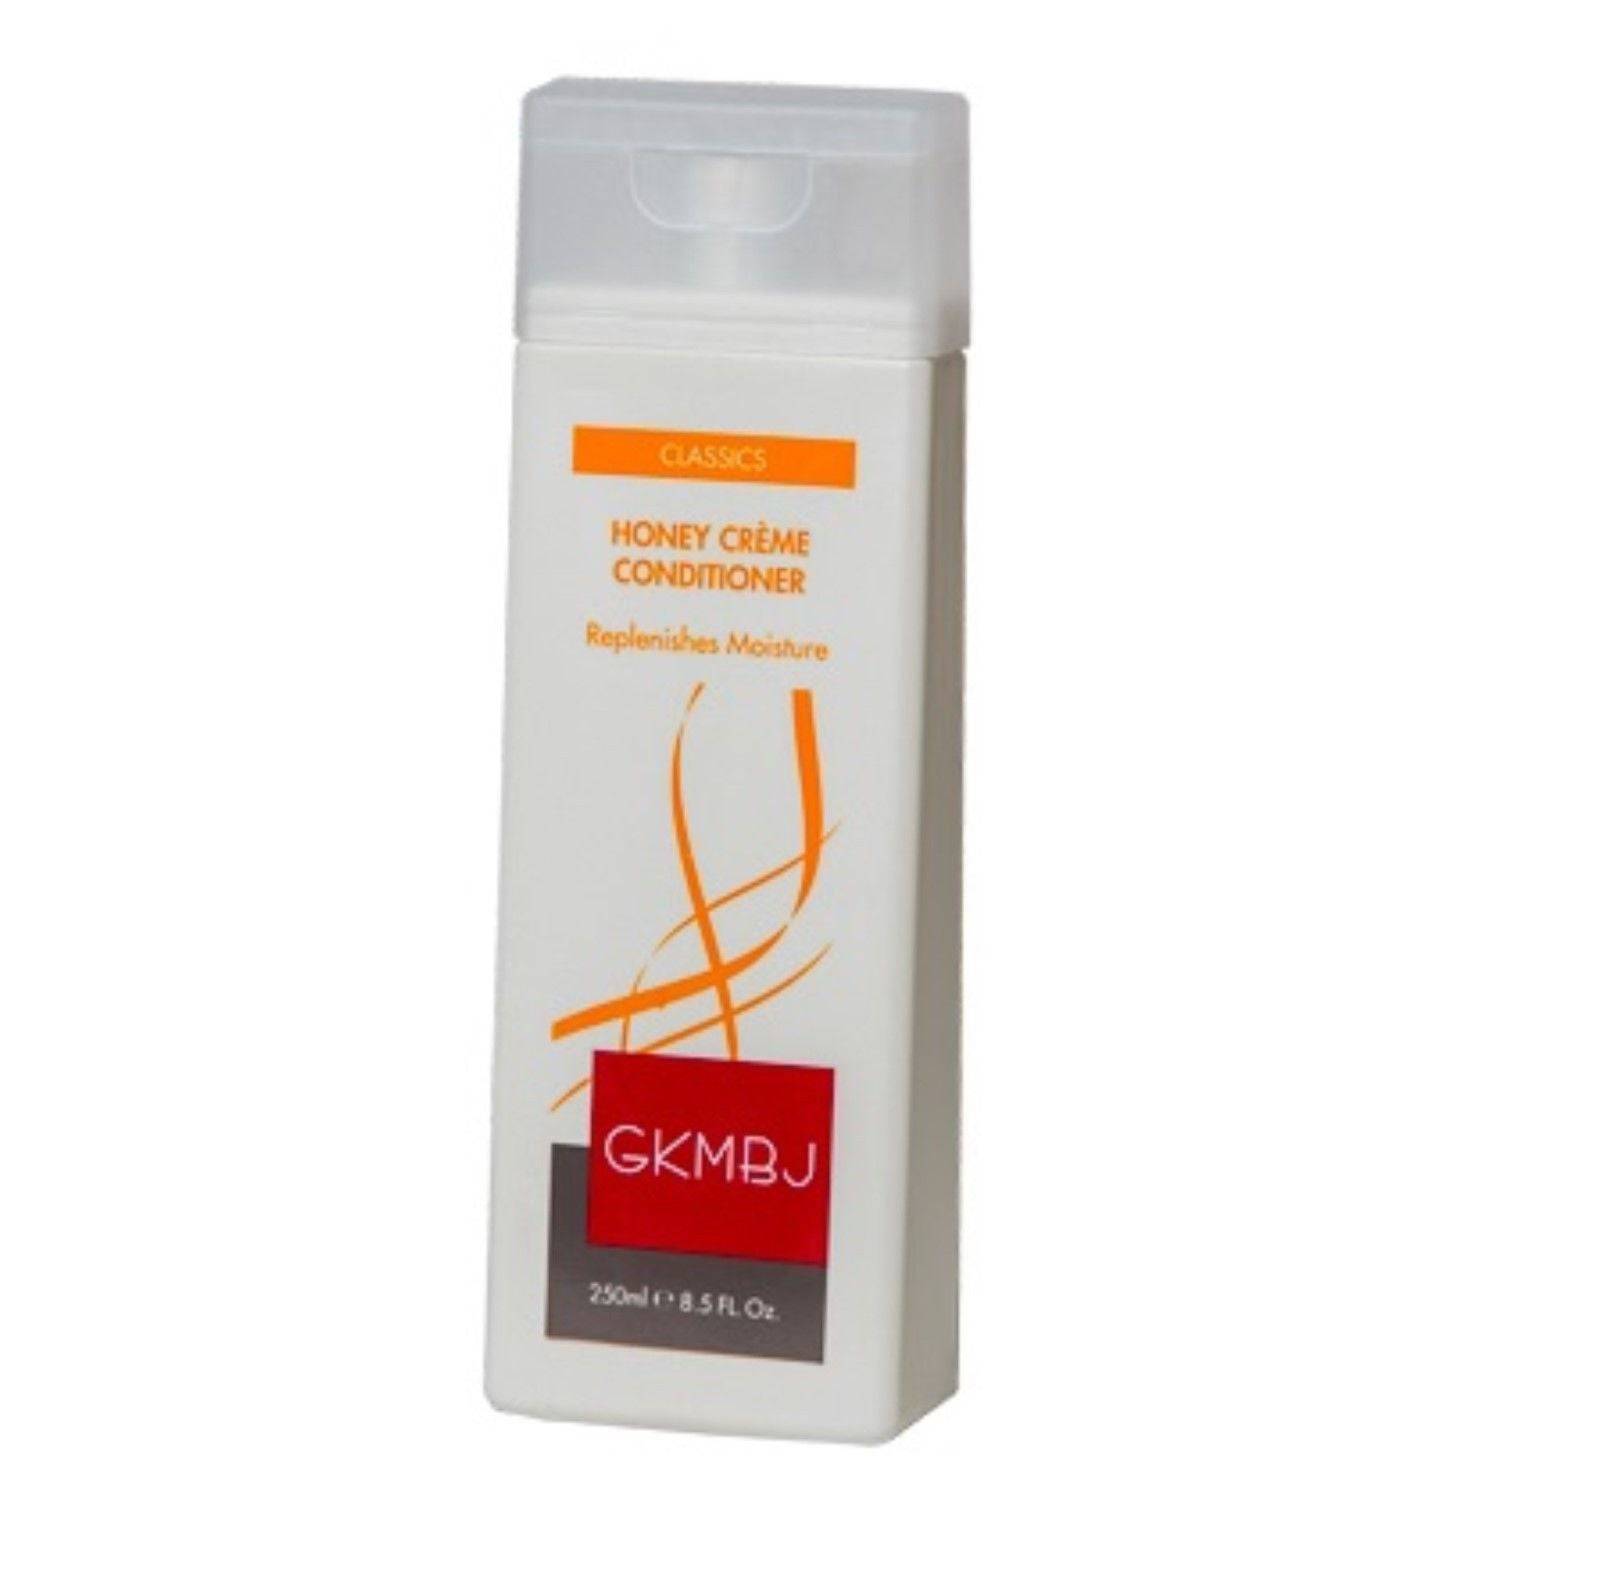 GKMBJ Hydrating Honey Creme Conditioner 250ml Replenishes  Moisture - On Line Hair Depot